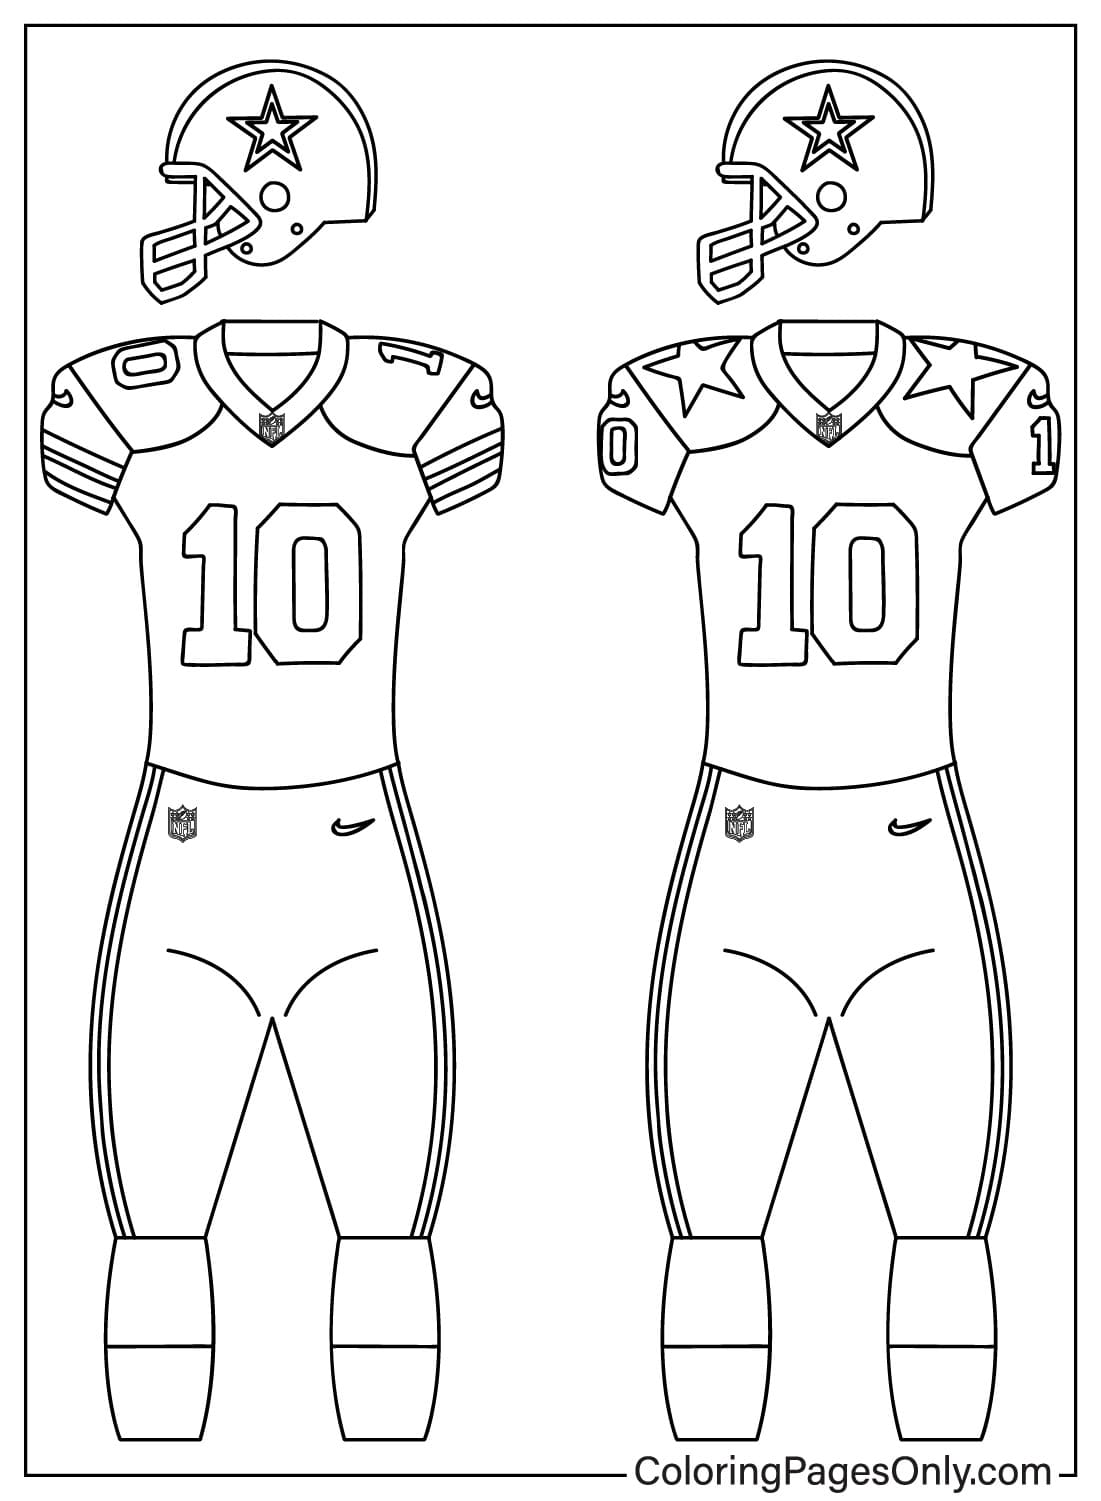 Página para colorir do uniforme do Dallas Cowboys do Dallas Cowboys